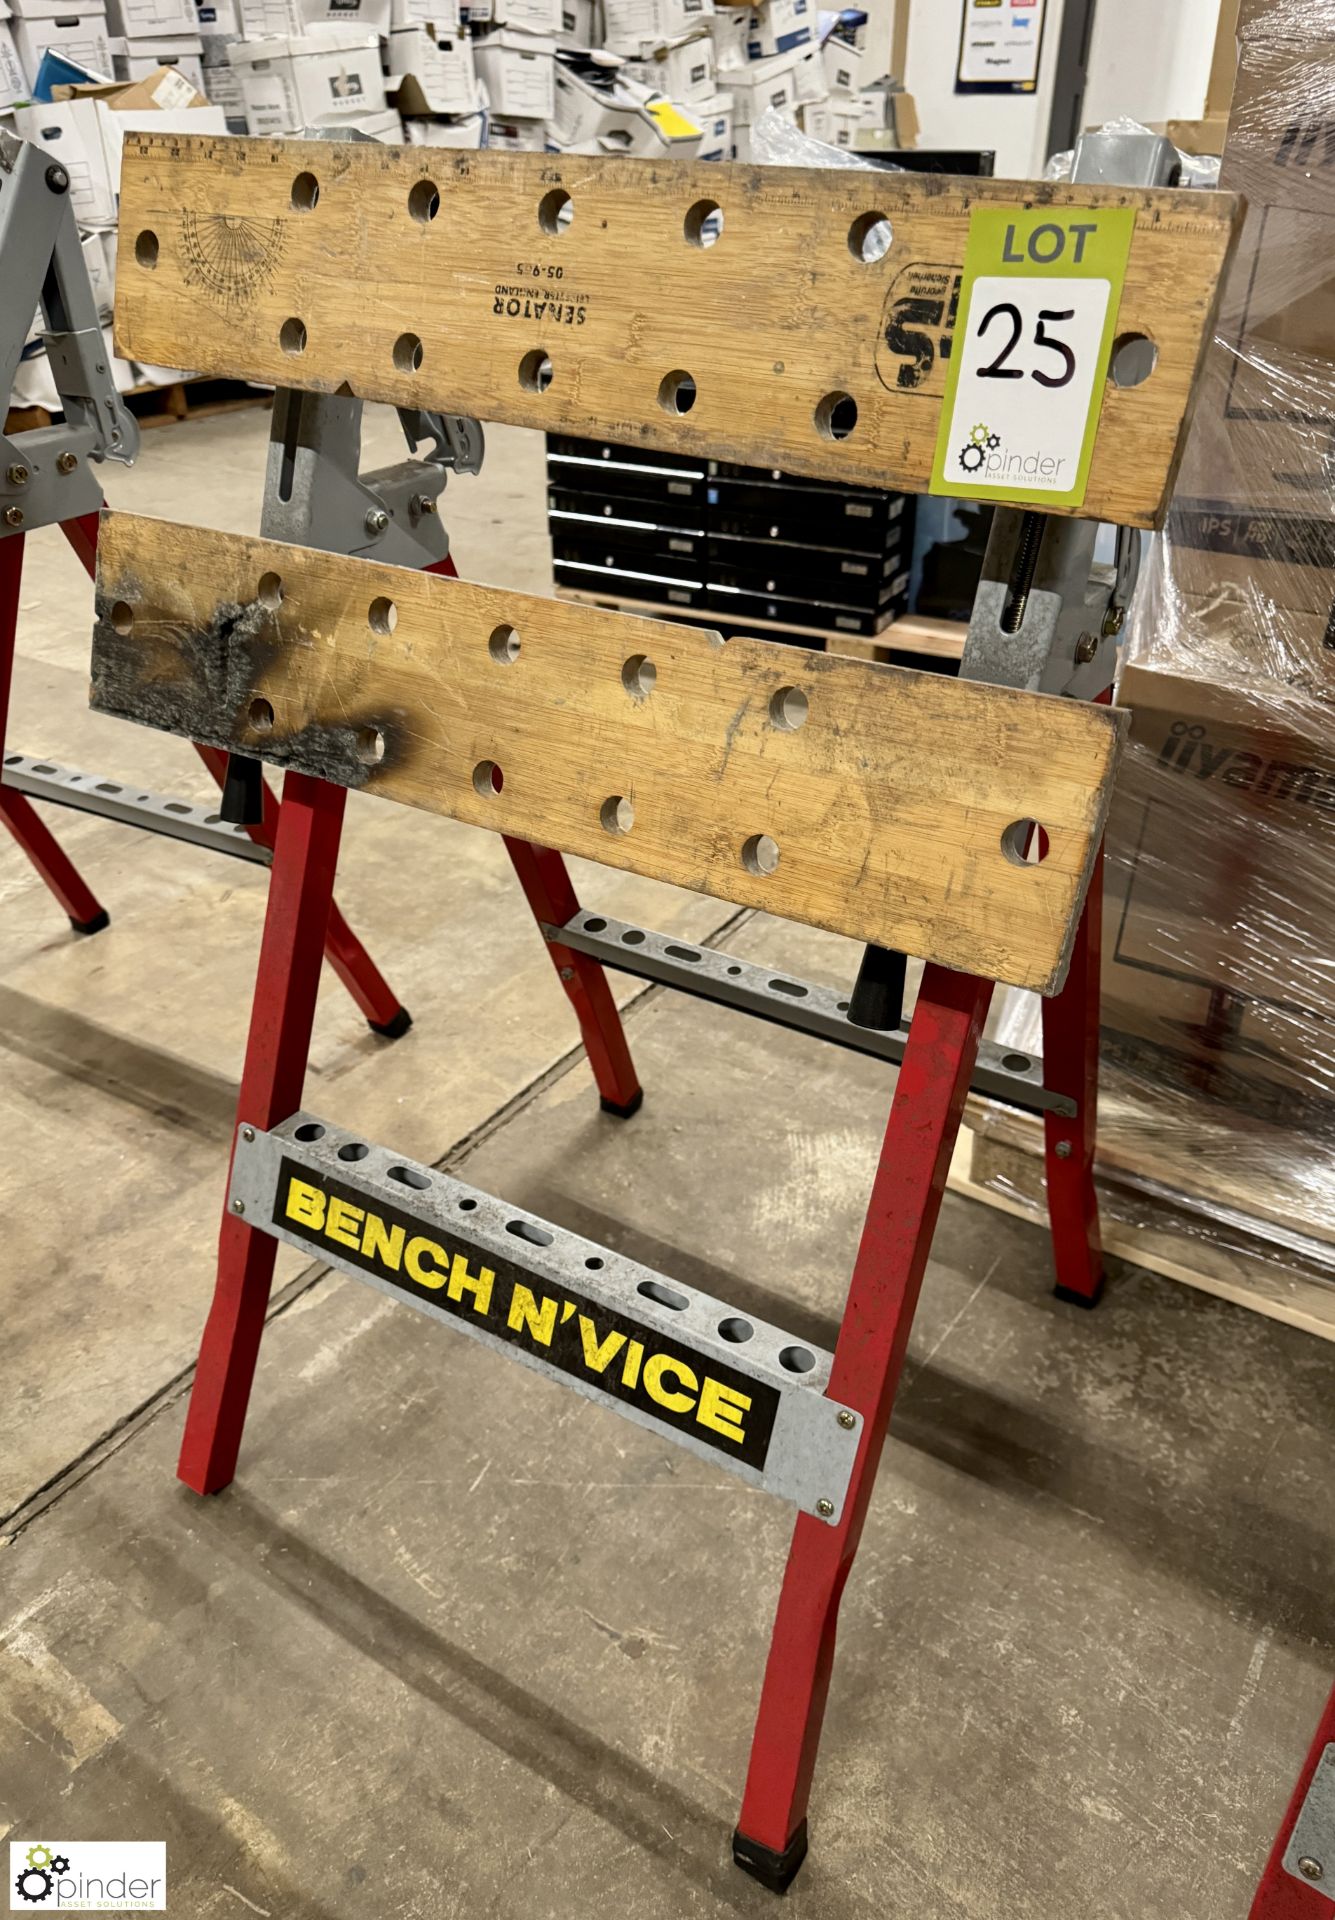 Senator Bench N’ Vice folding Workbench